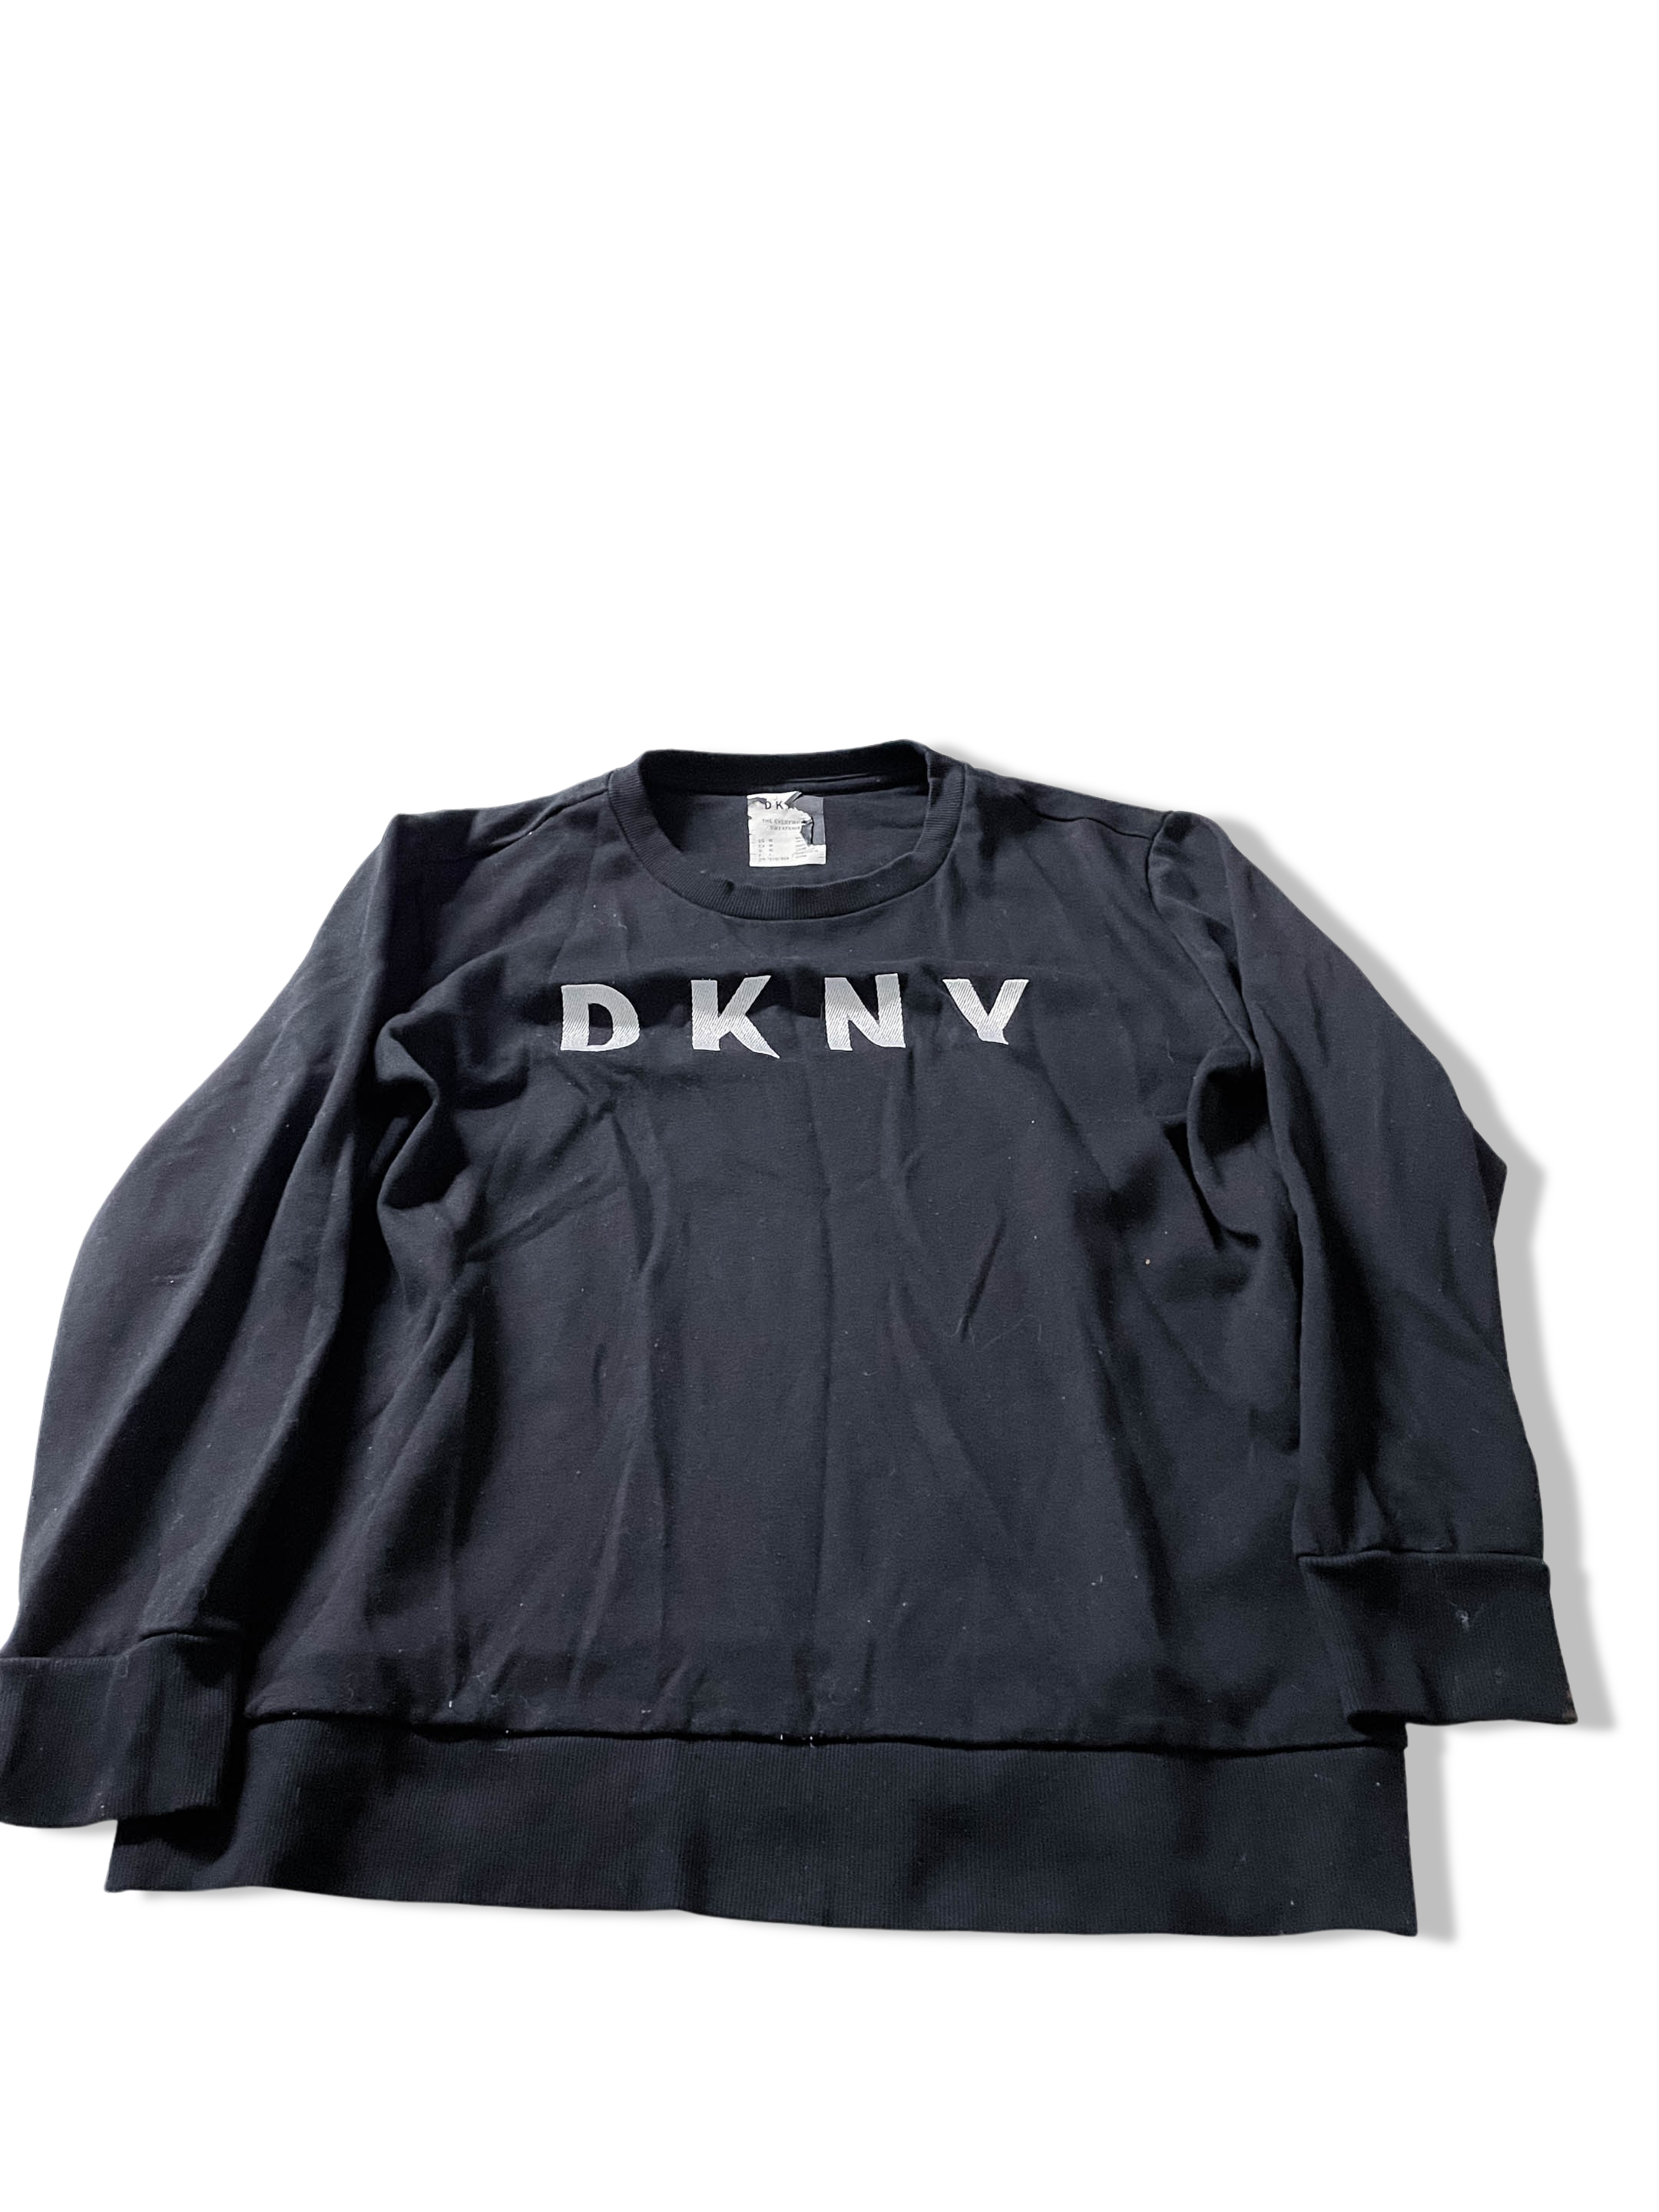 Vintage DKNY print  small black sweatshirt